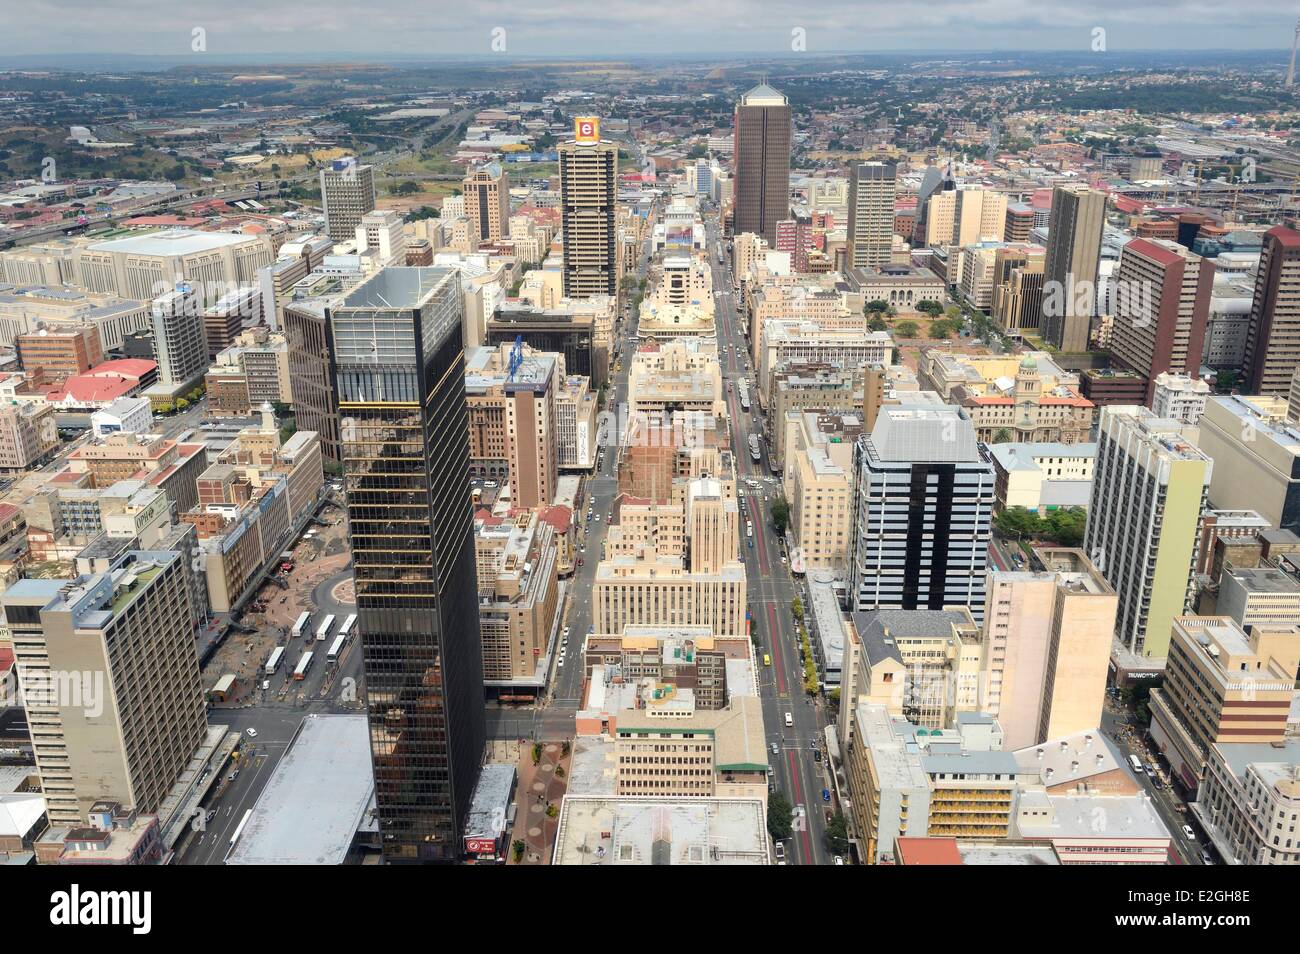 Provinz Gauteng Südafrika Johannesburg CBD (Central Business District) Innenstadt Blick Carlton Center tower Kommissar Street und Main street Stockfoto